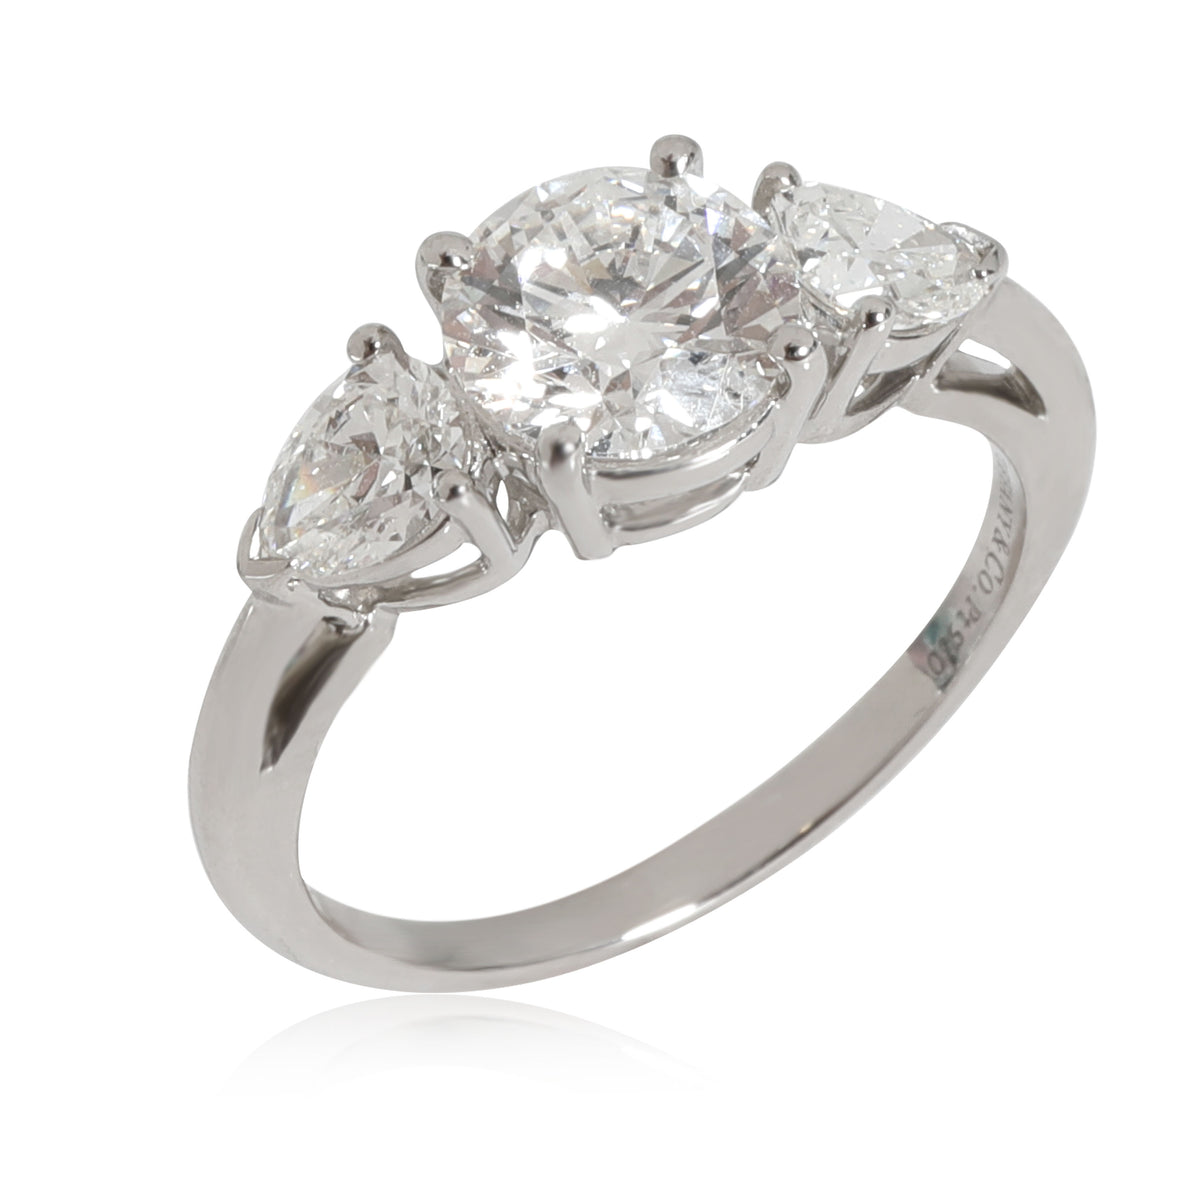 Tiffany & Co. Three Stone Diamond Engagement Ring in Platinum G IF 1.86 CTW